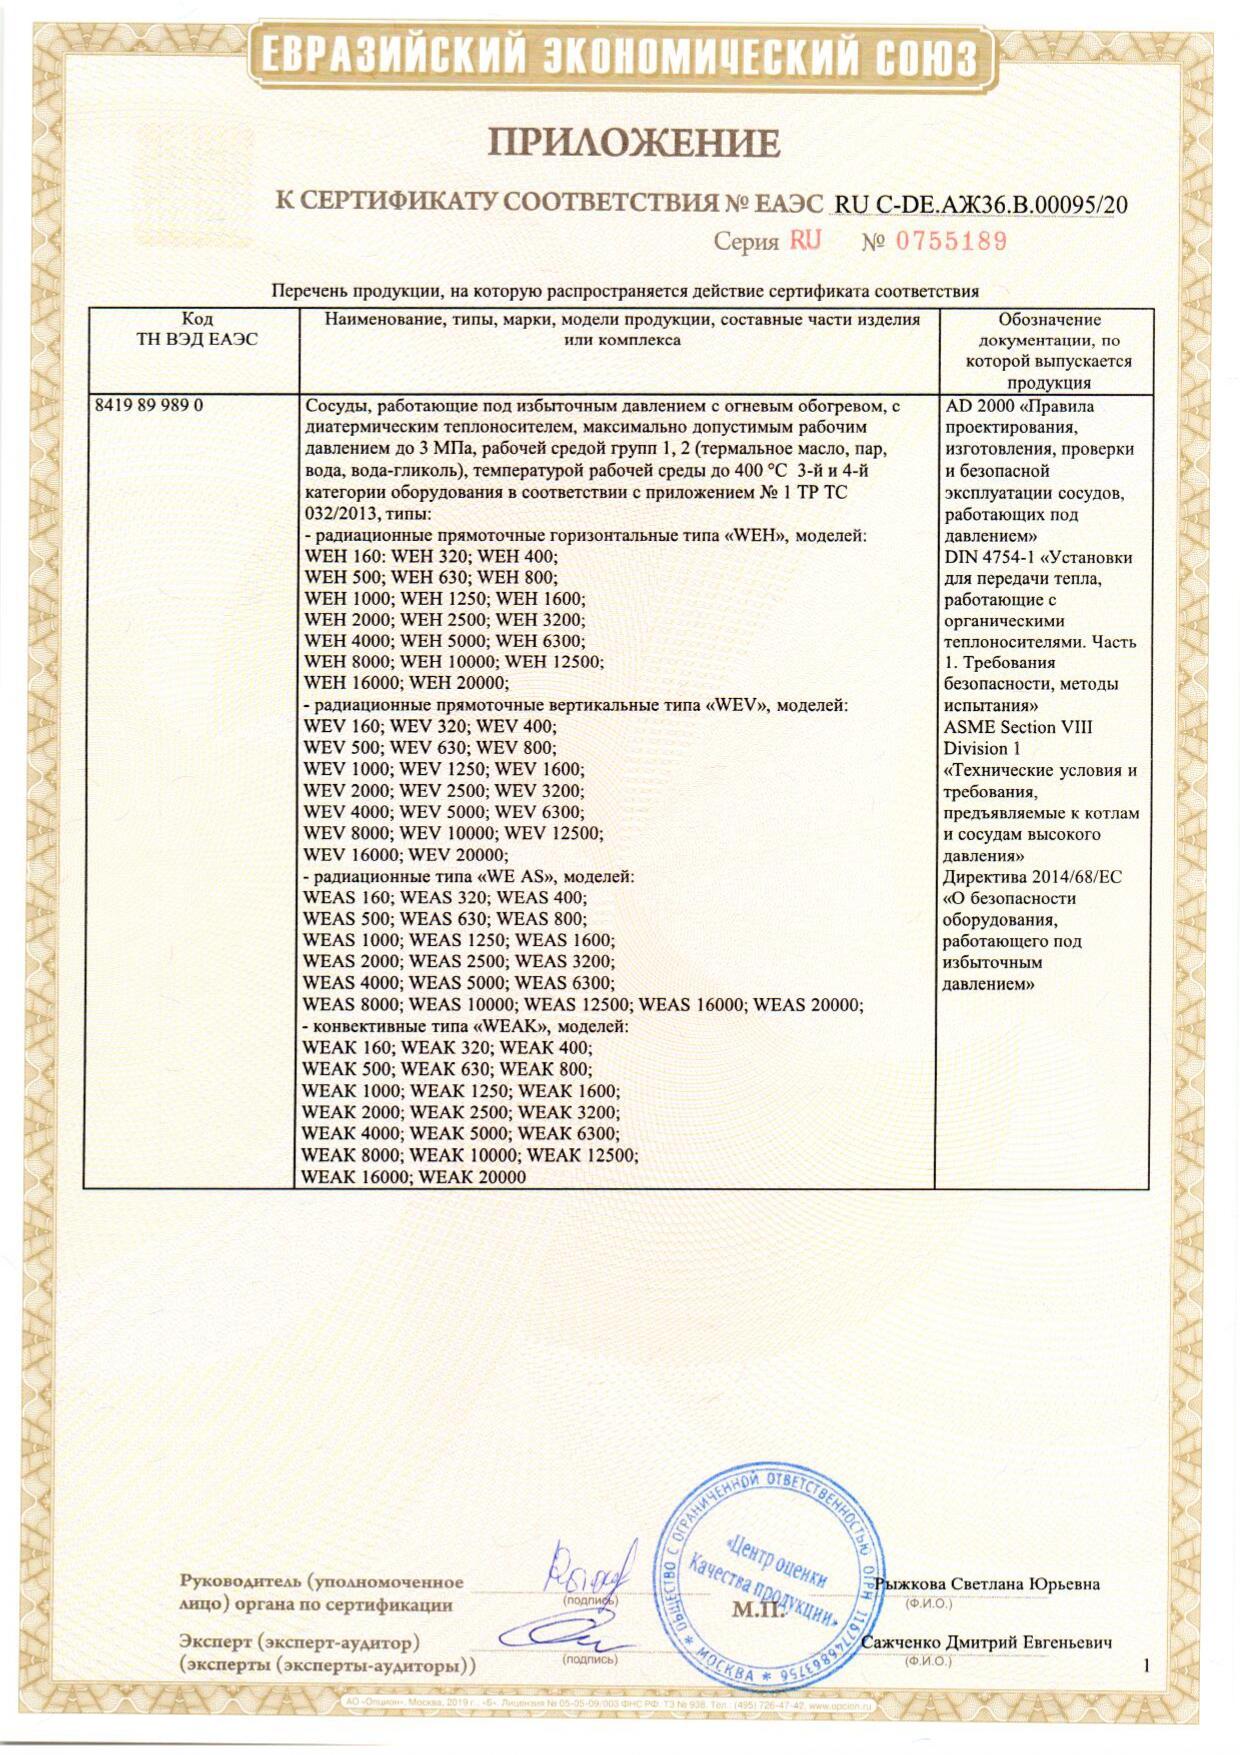 NESS Zollunion Konformitäts-Deklaration für Thermalölanlagen (Russian)_0002